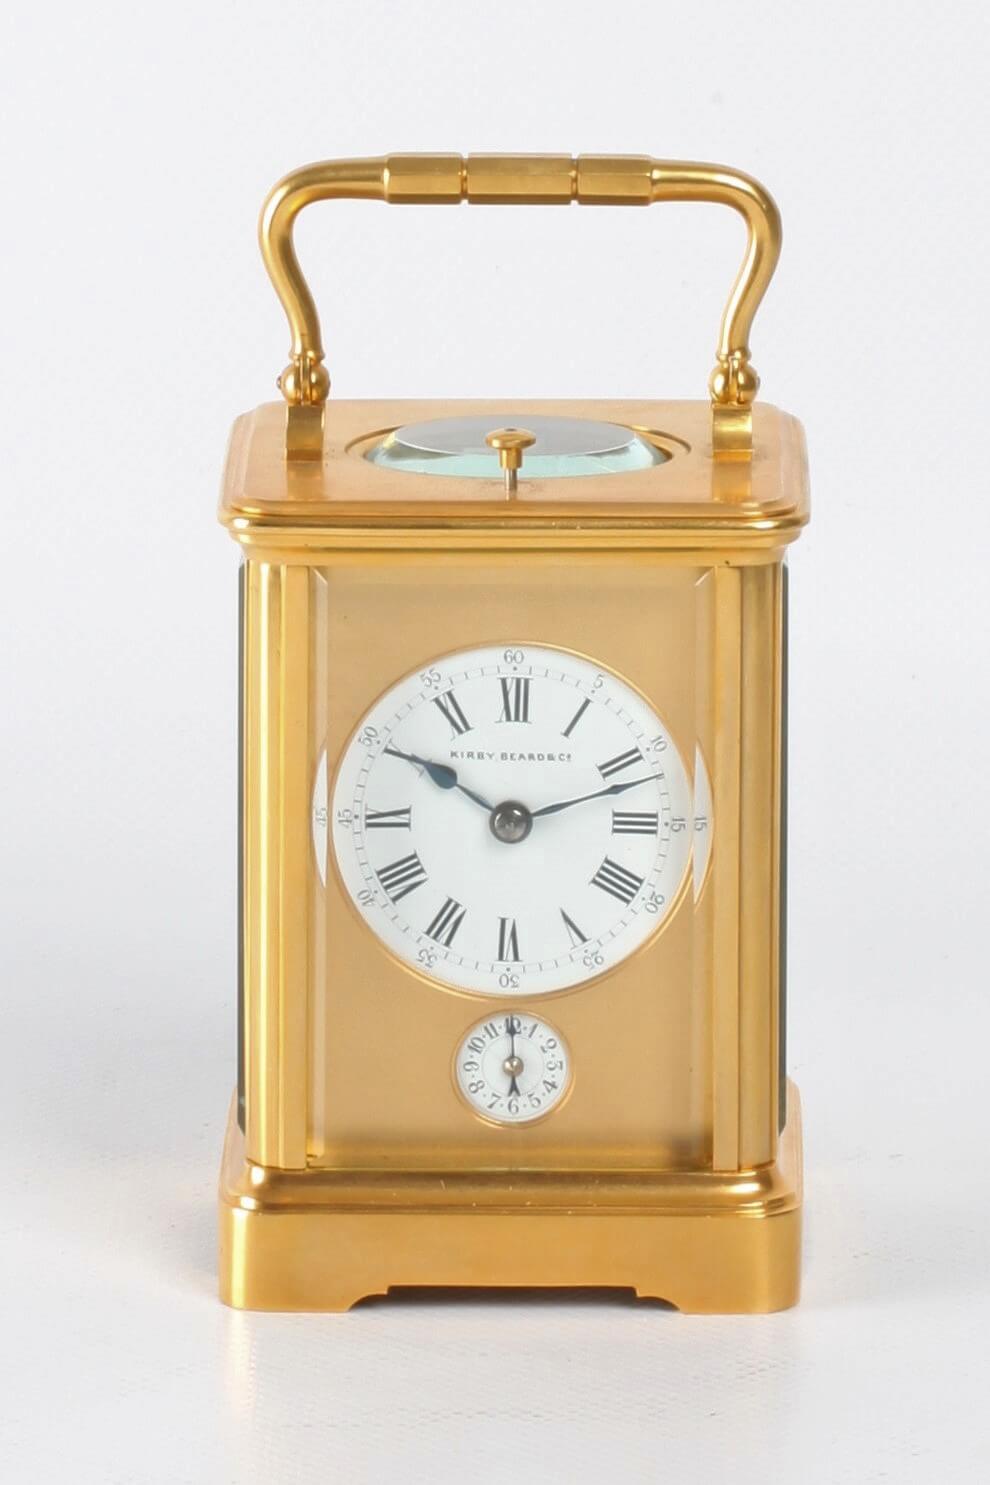 French corniche quarter striking Margaine carriage clock 1880